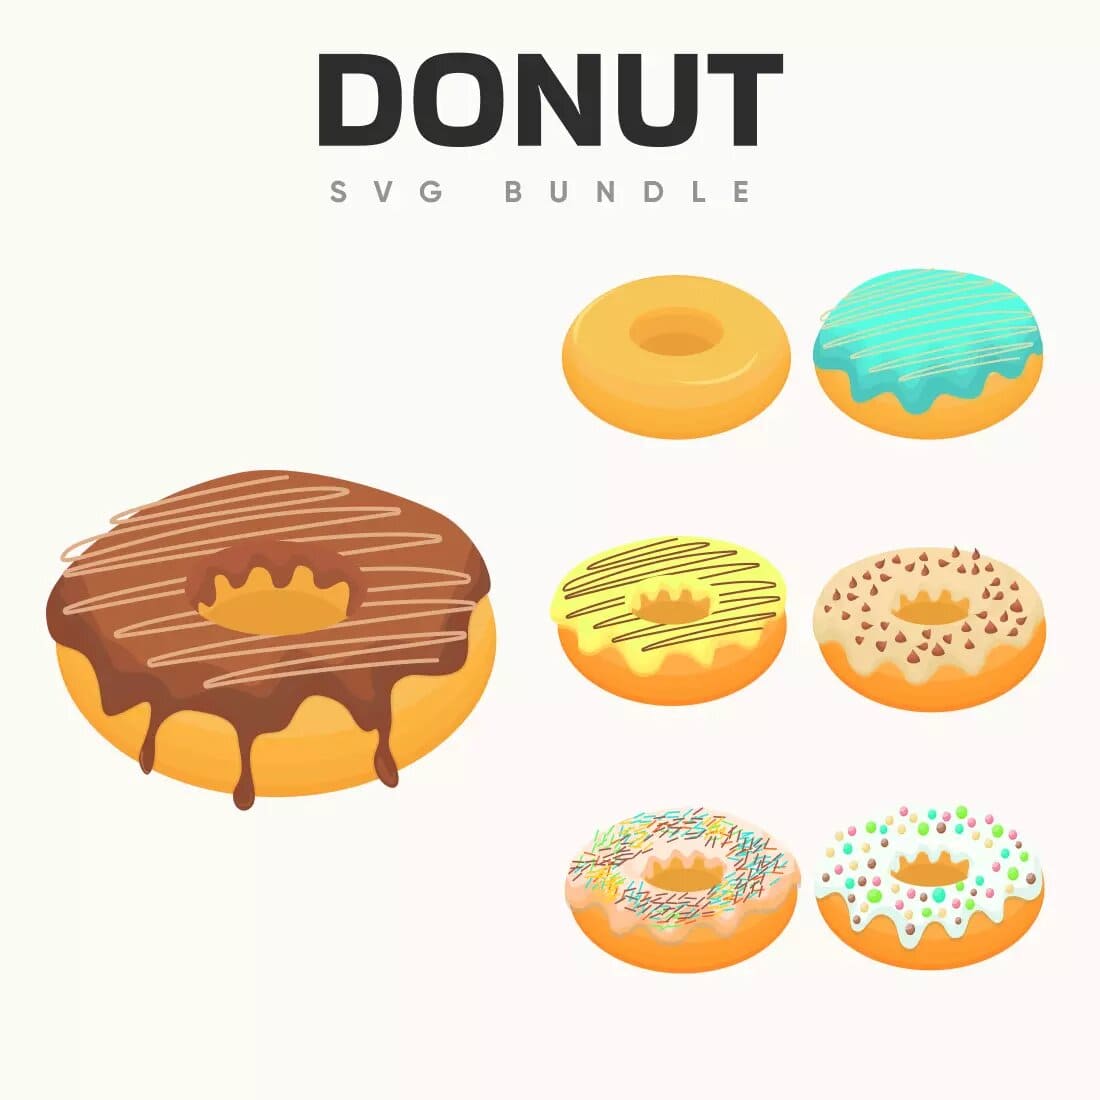 Donut SVG Bundle Preview 6.